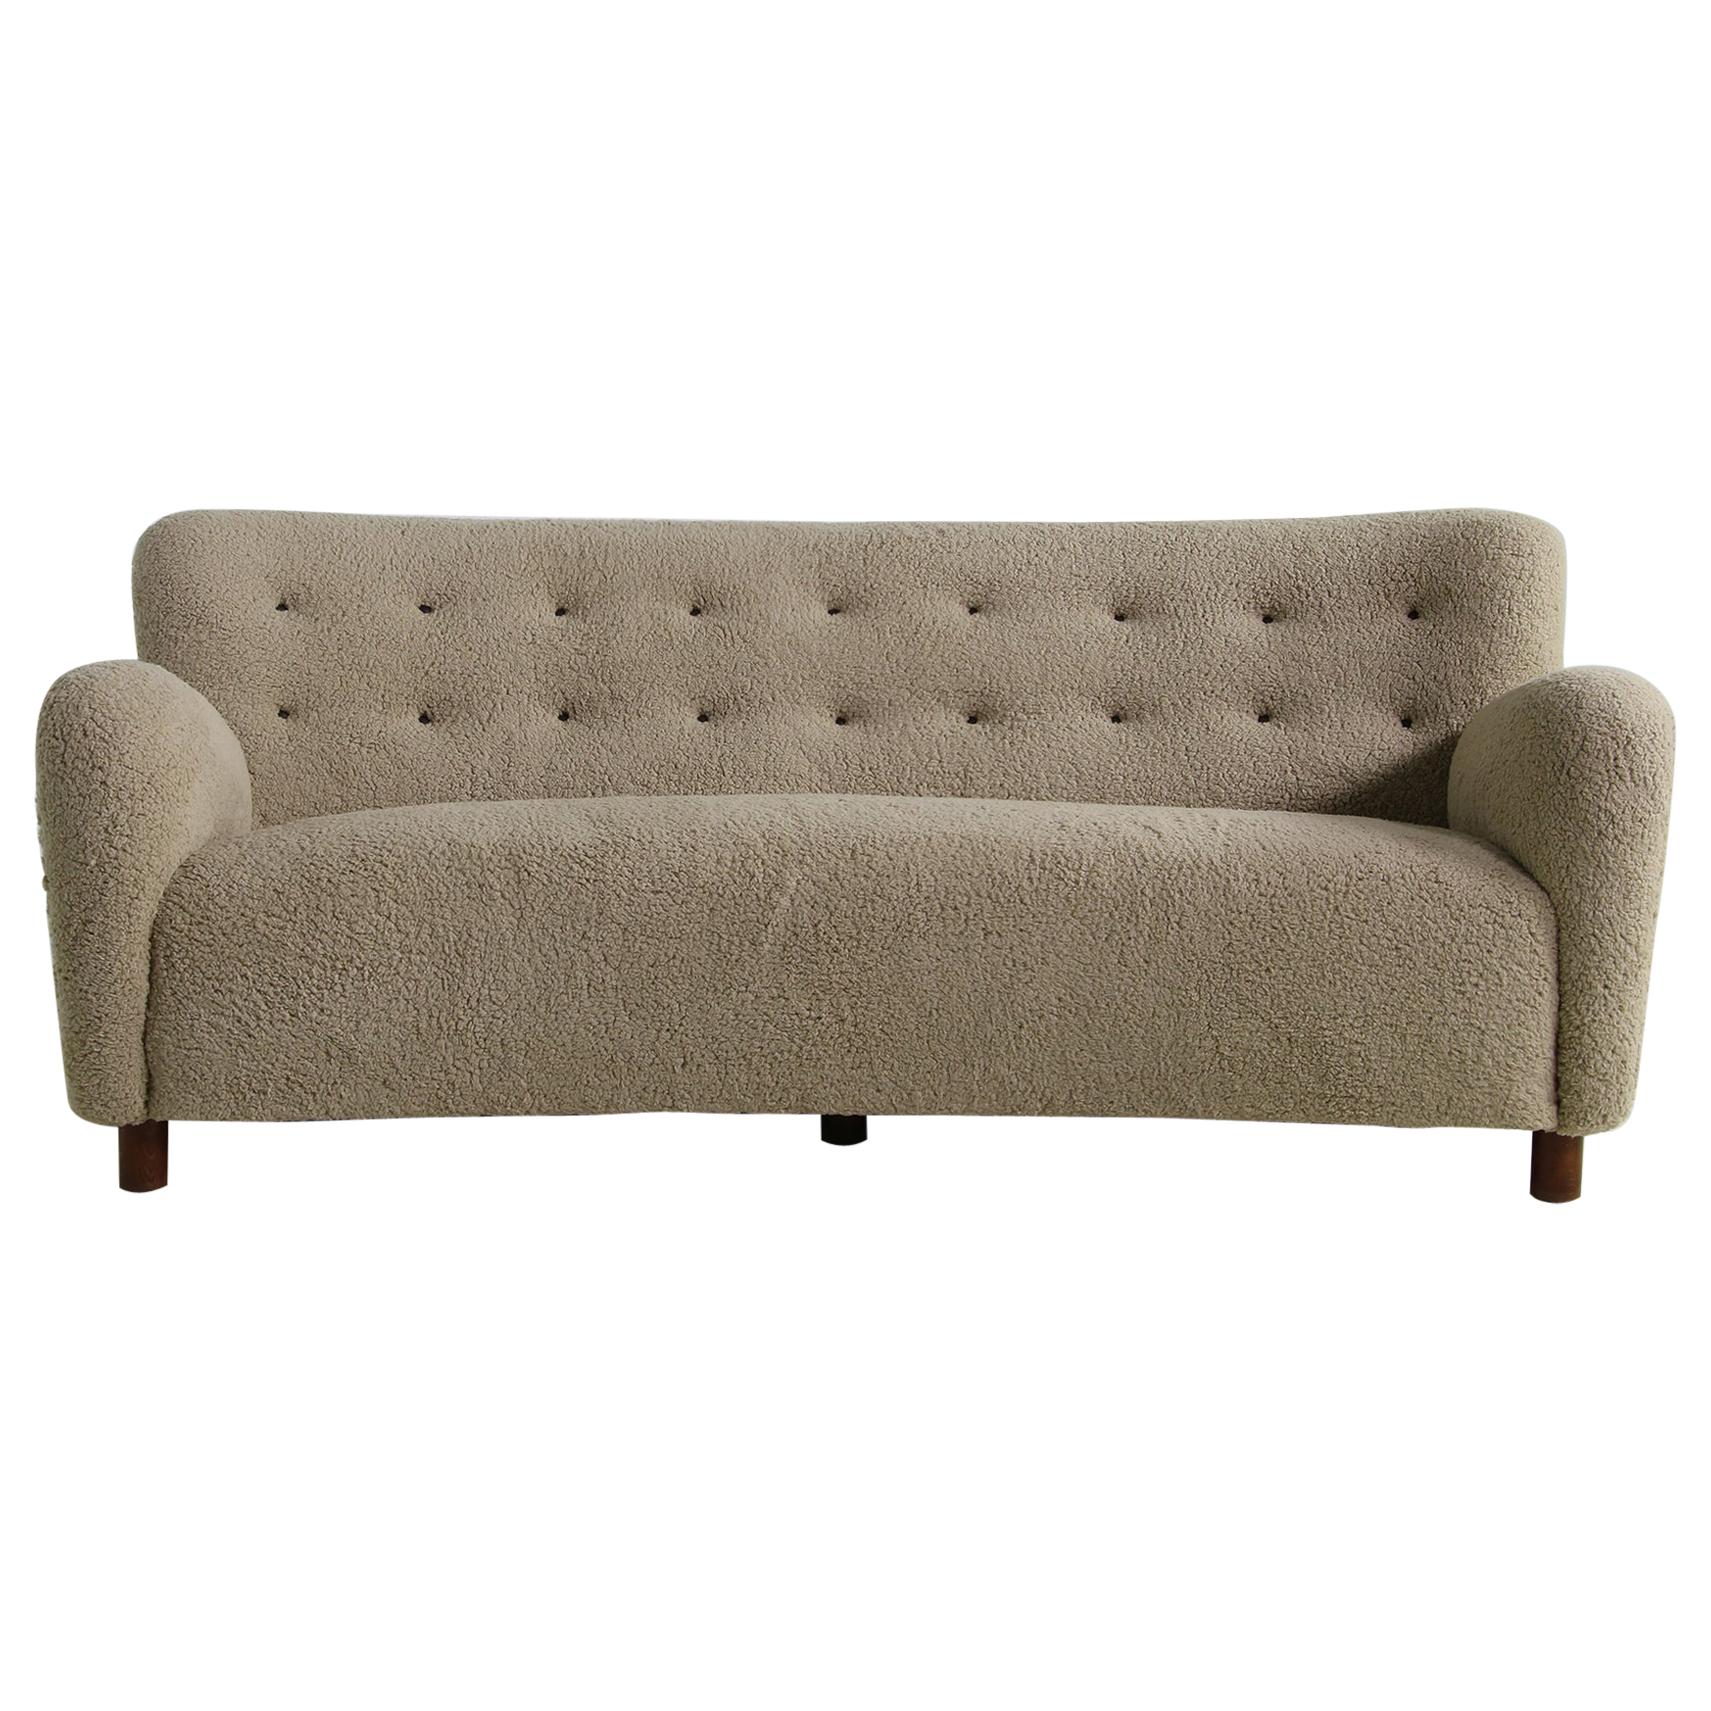 Unique Curved Sofa, Midcentury, Teddy Fur, 1950s, Mogens Lassen, Tufted Leather